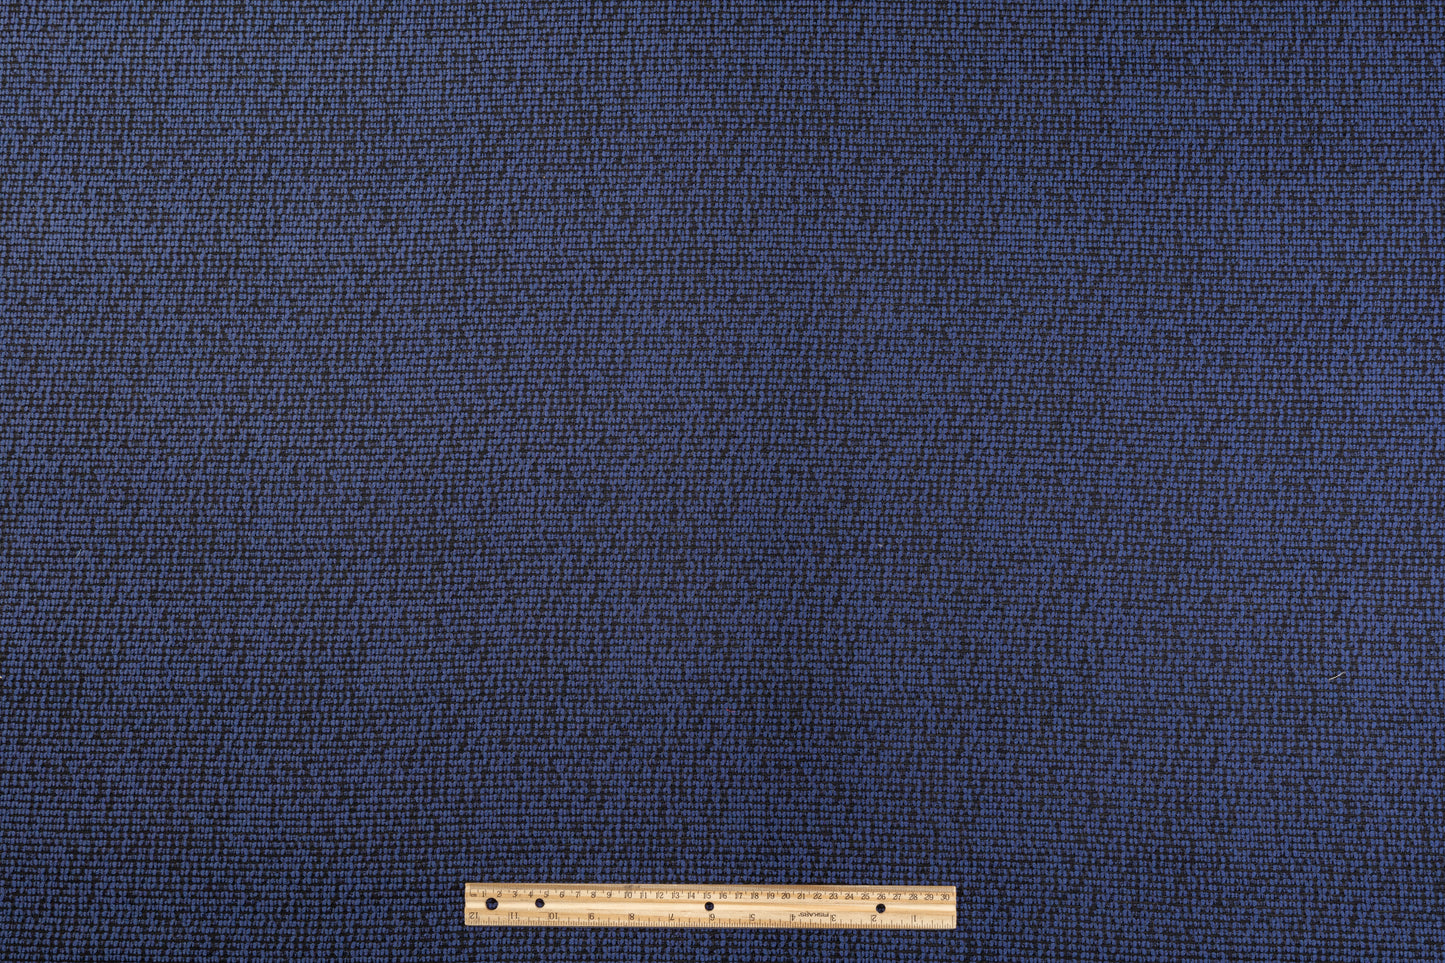 Cotton Tweed - Blue / Black